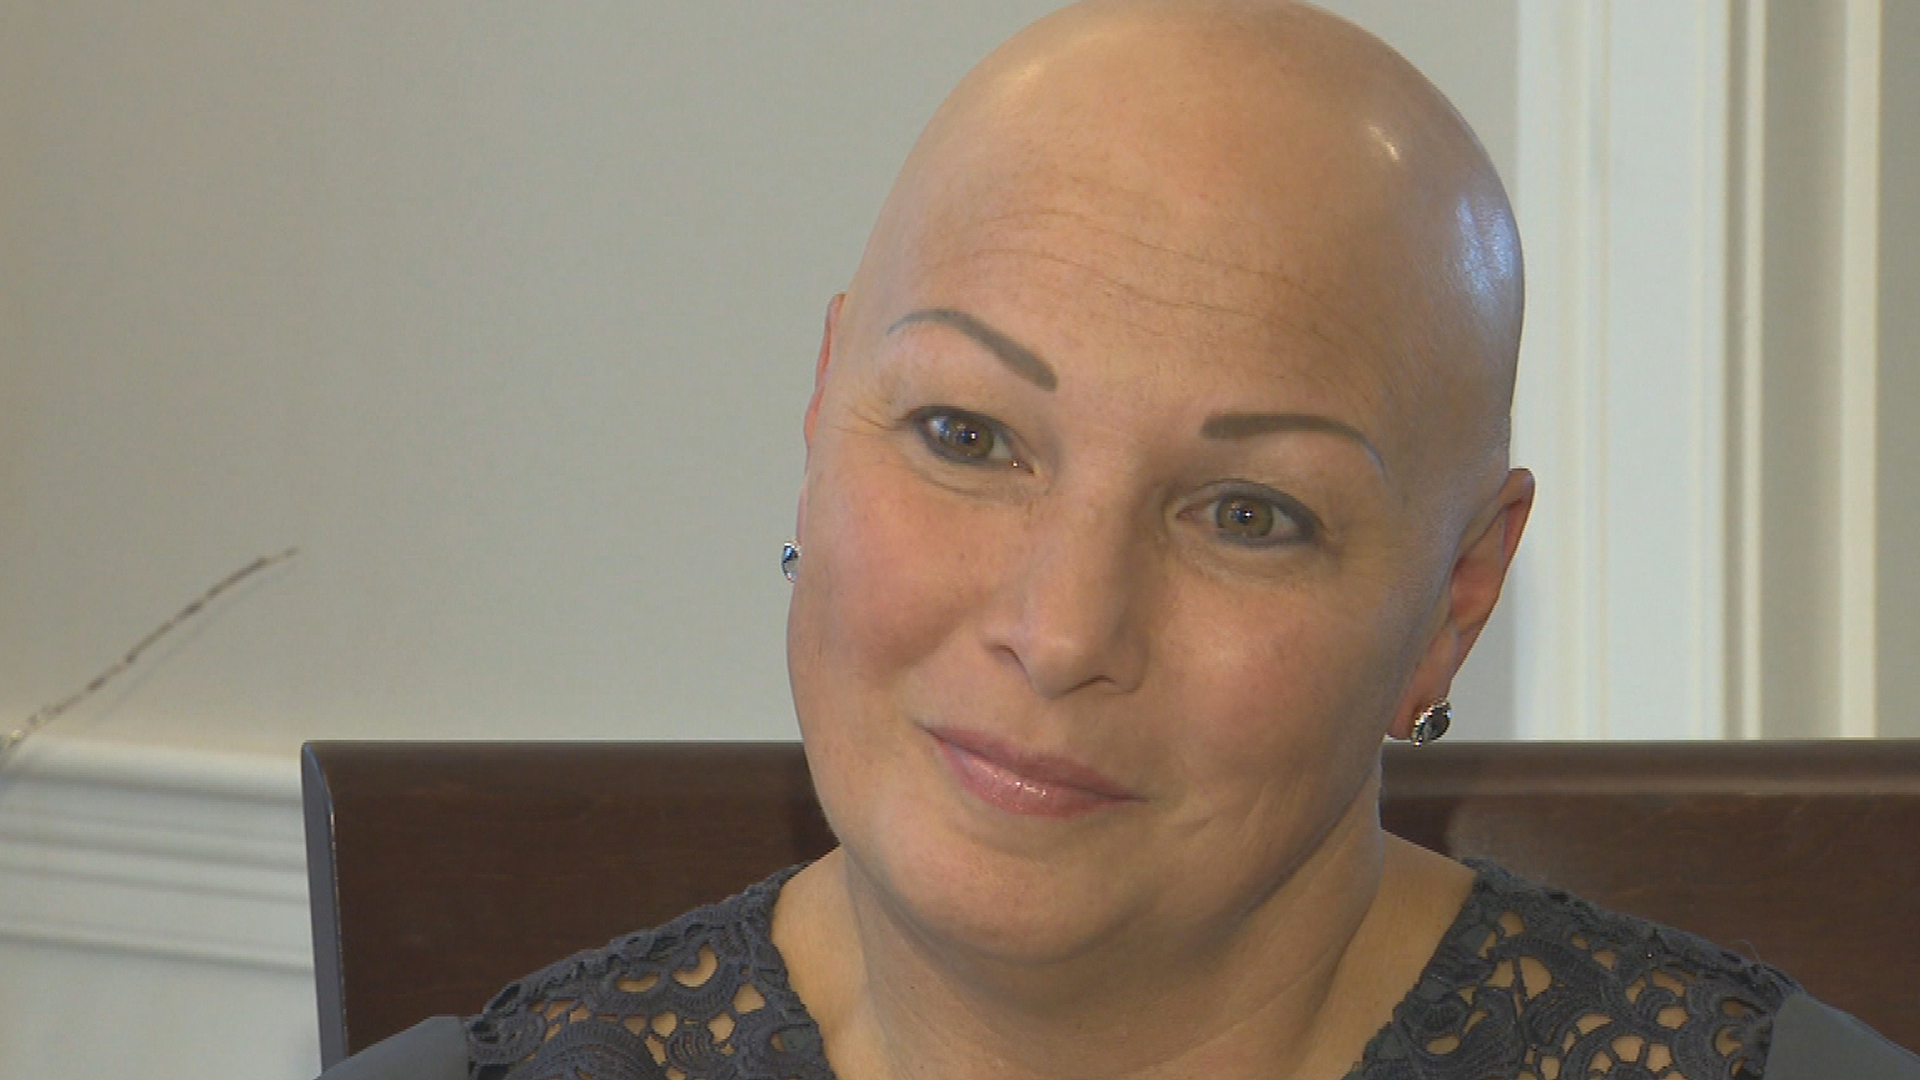 People In Massachusetts Living With Alopecia Hope 'Oscars Slap' Brings  Awareness Of Disease - CBS Boston